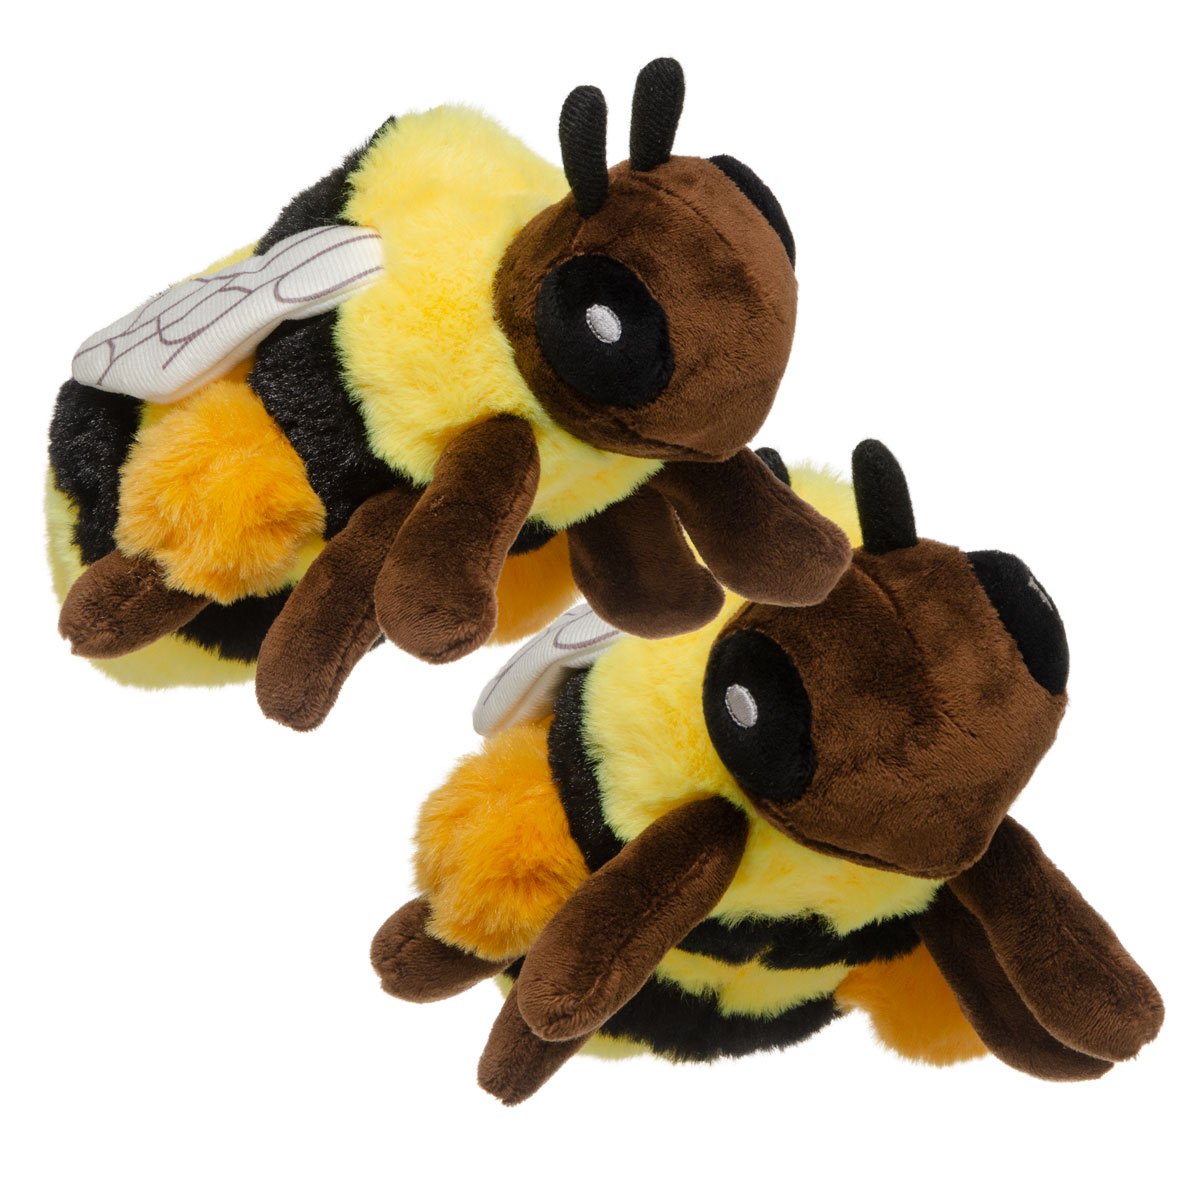 https://gifts.worldwildlife.org/gift-center/images/species-adoptions/Bee/Bee-plush-z2.jpg